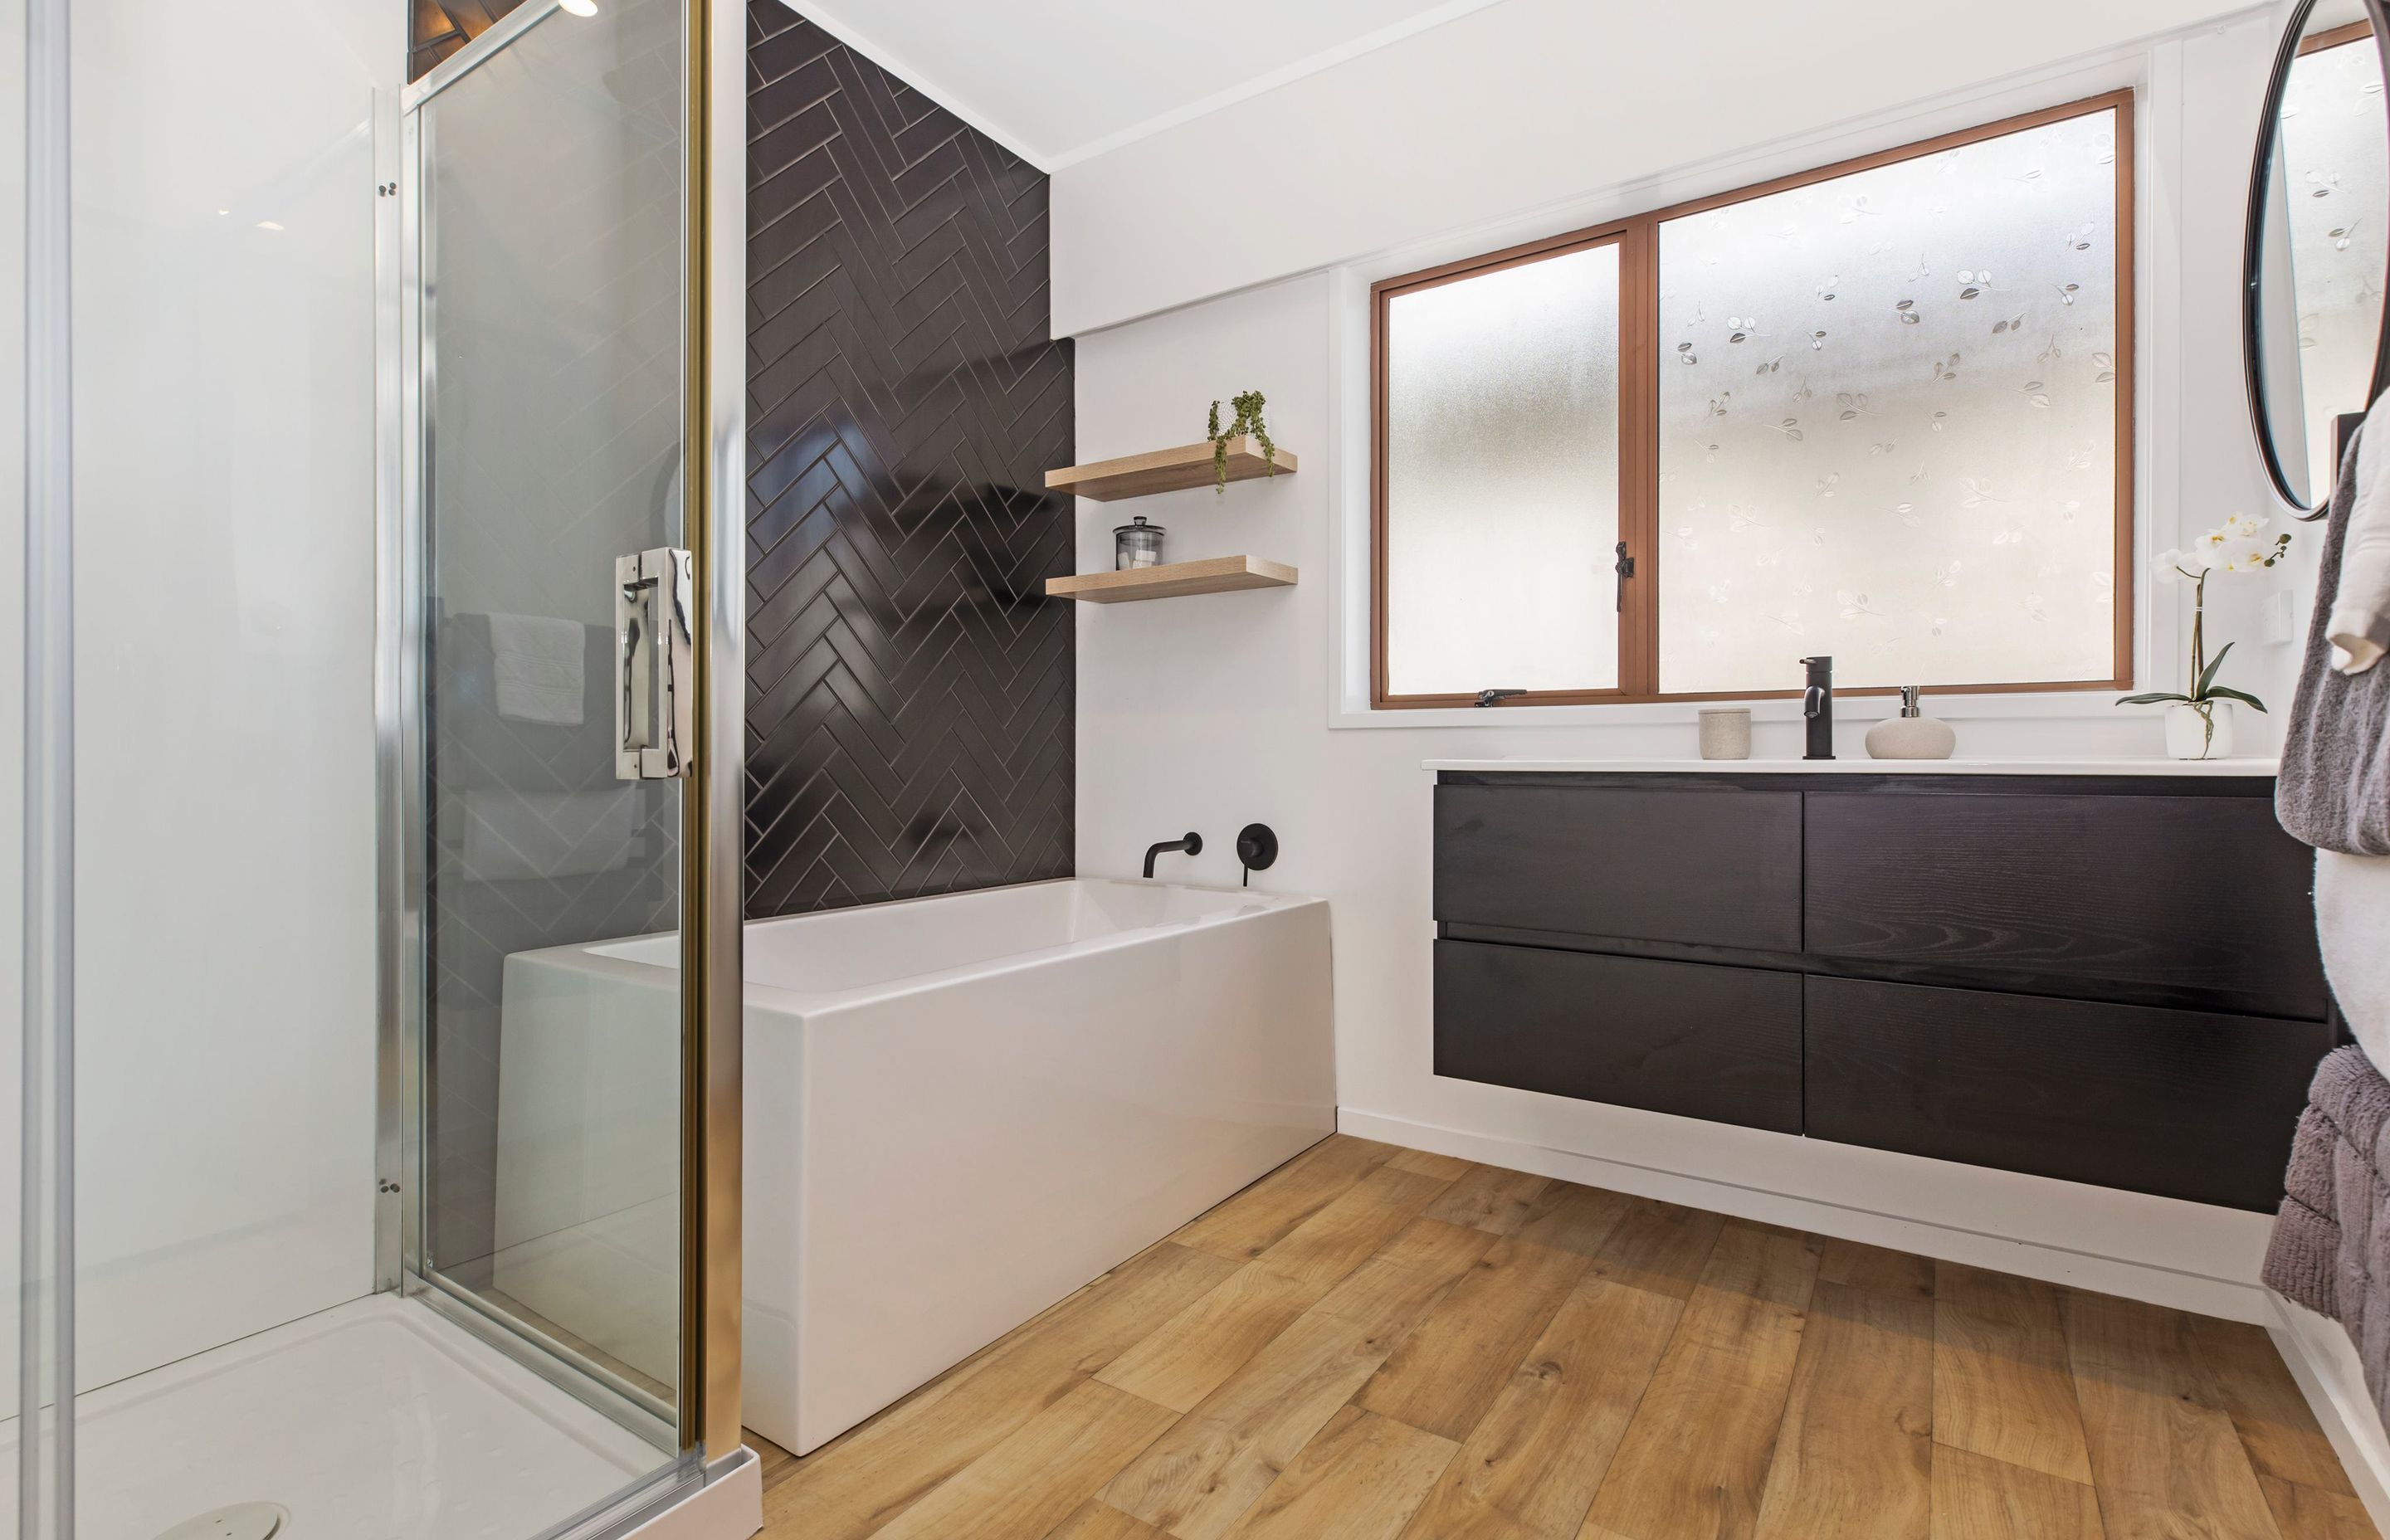 Bathroom - Herringbone tiles to top off an amazing bathroom